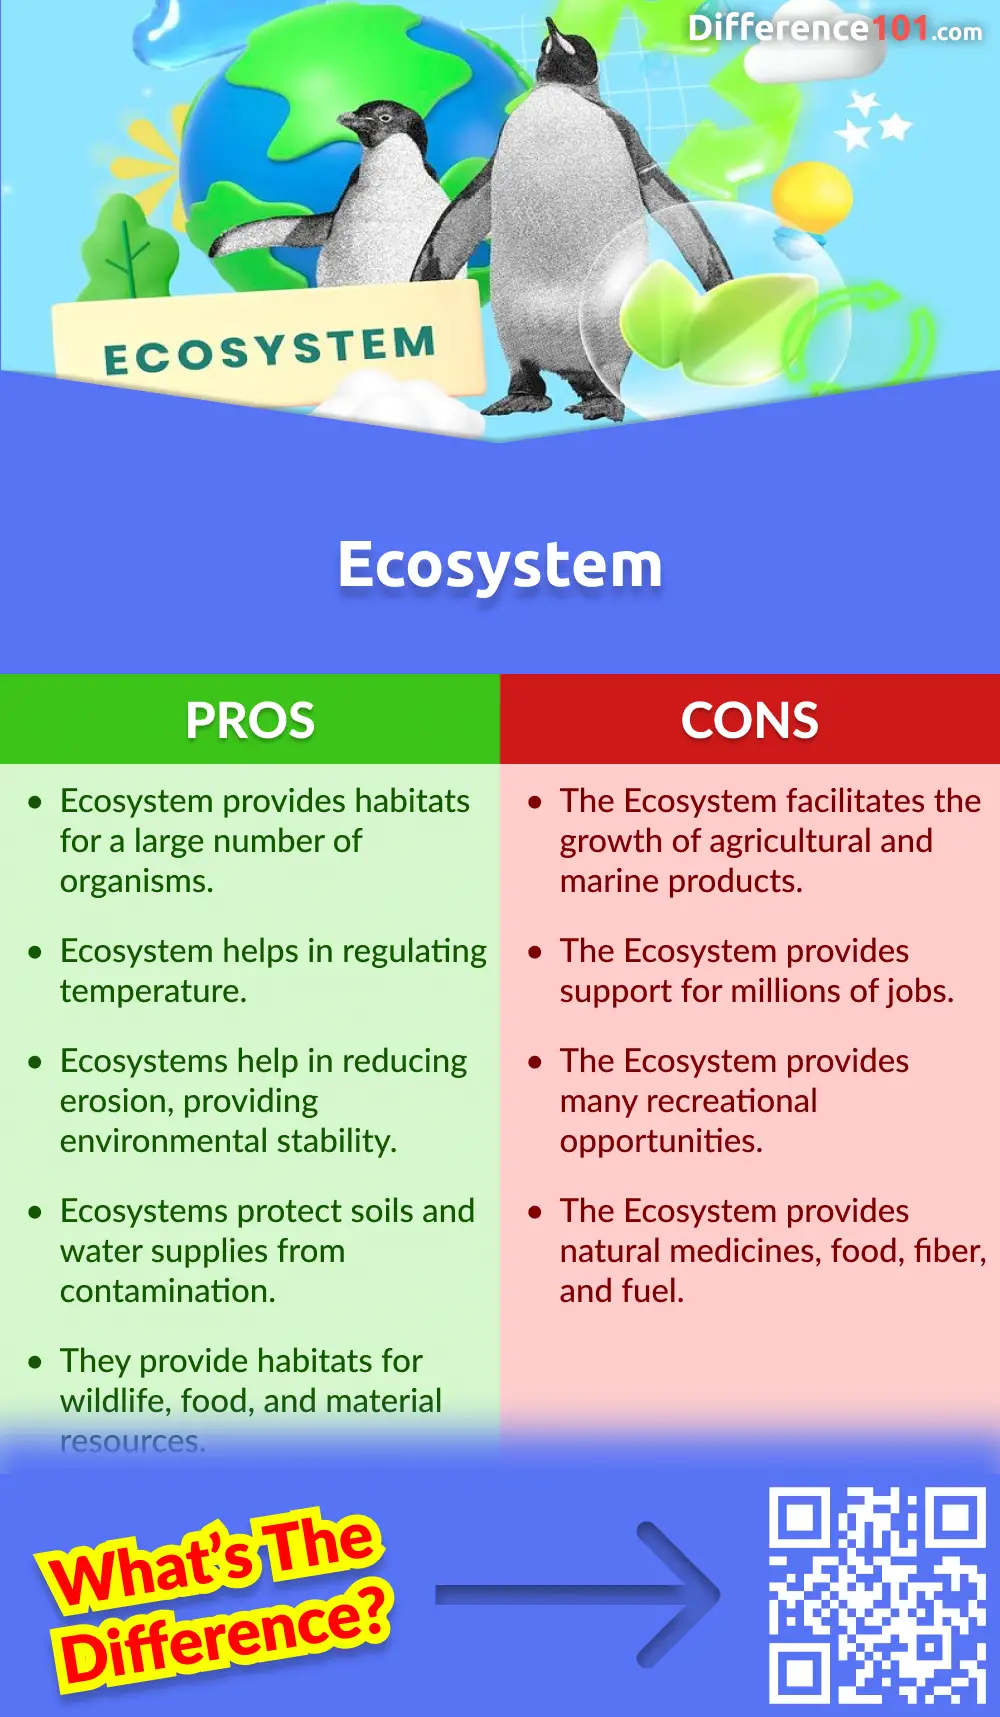 Ecosystem Pros & Cons
